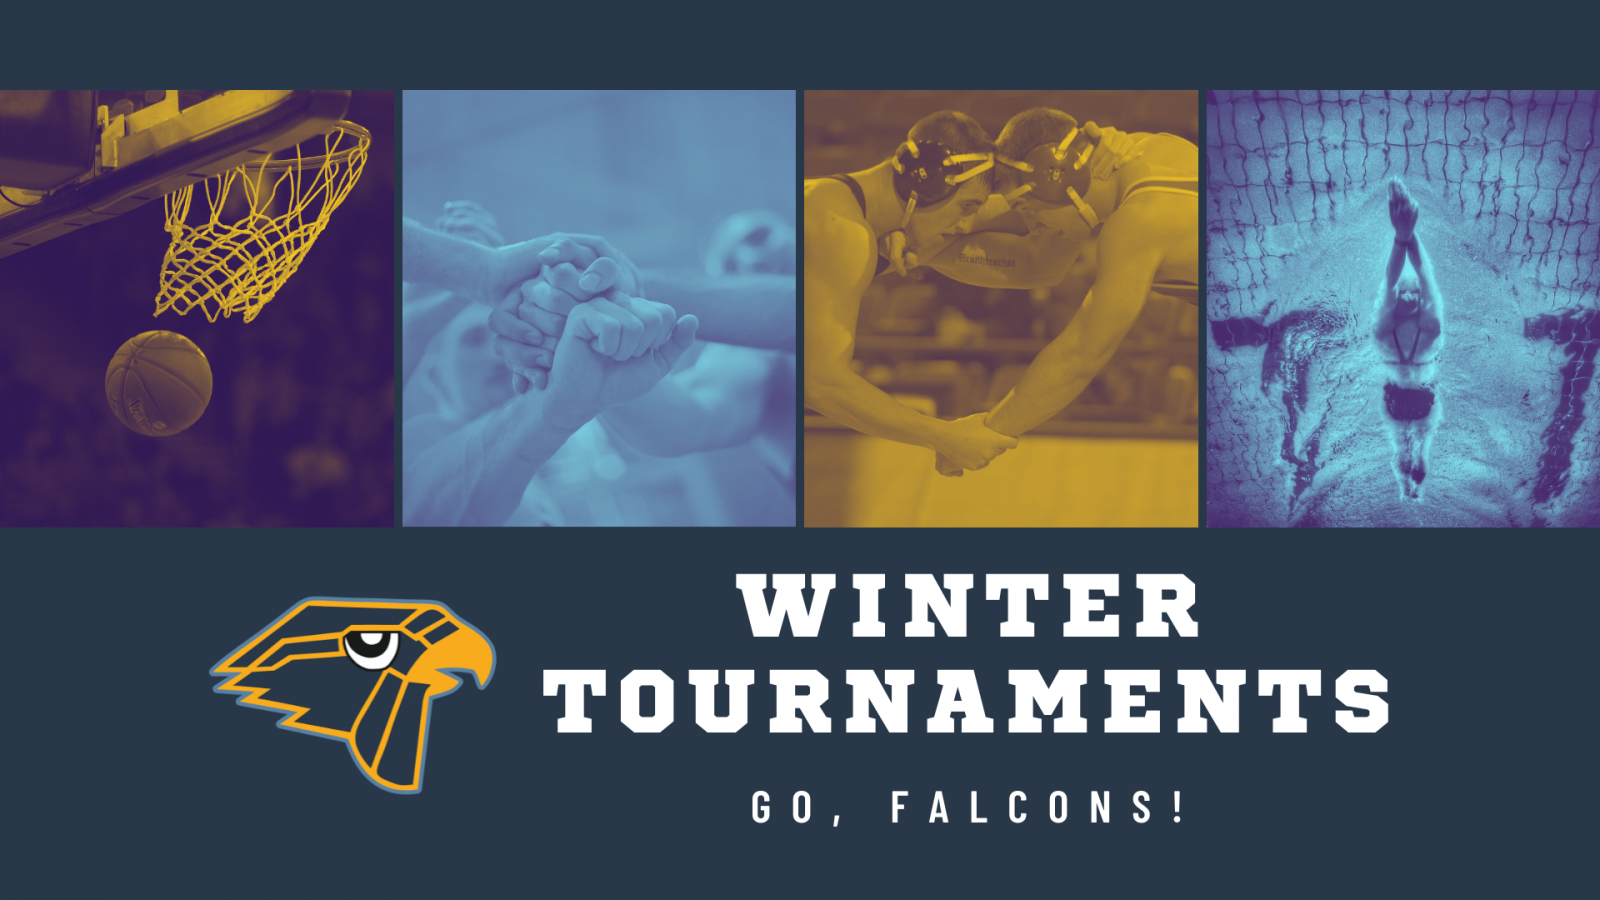 Decorative: "Winter Tournaments; Go, Falcons!"